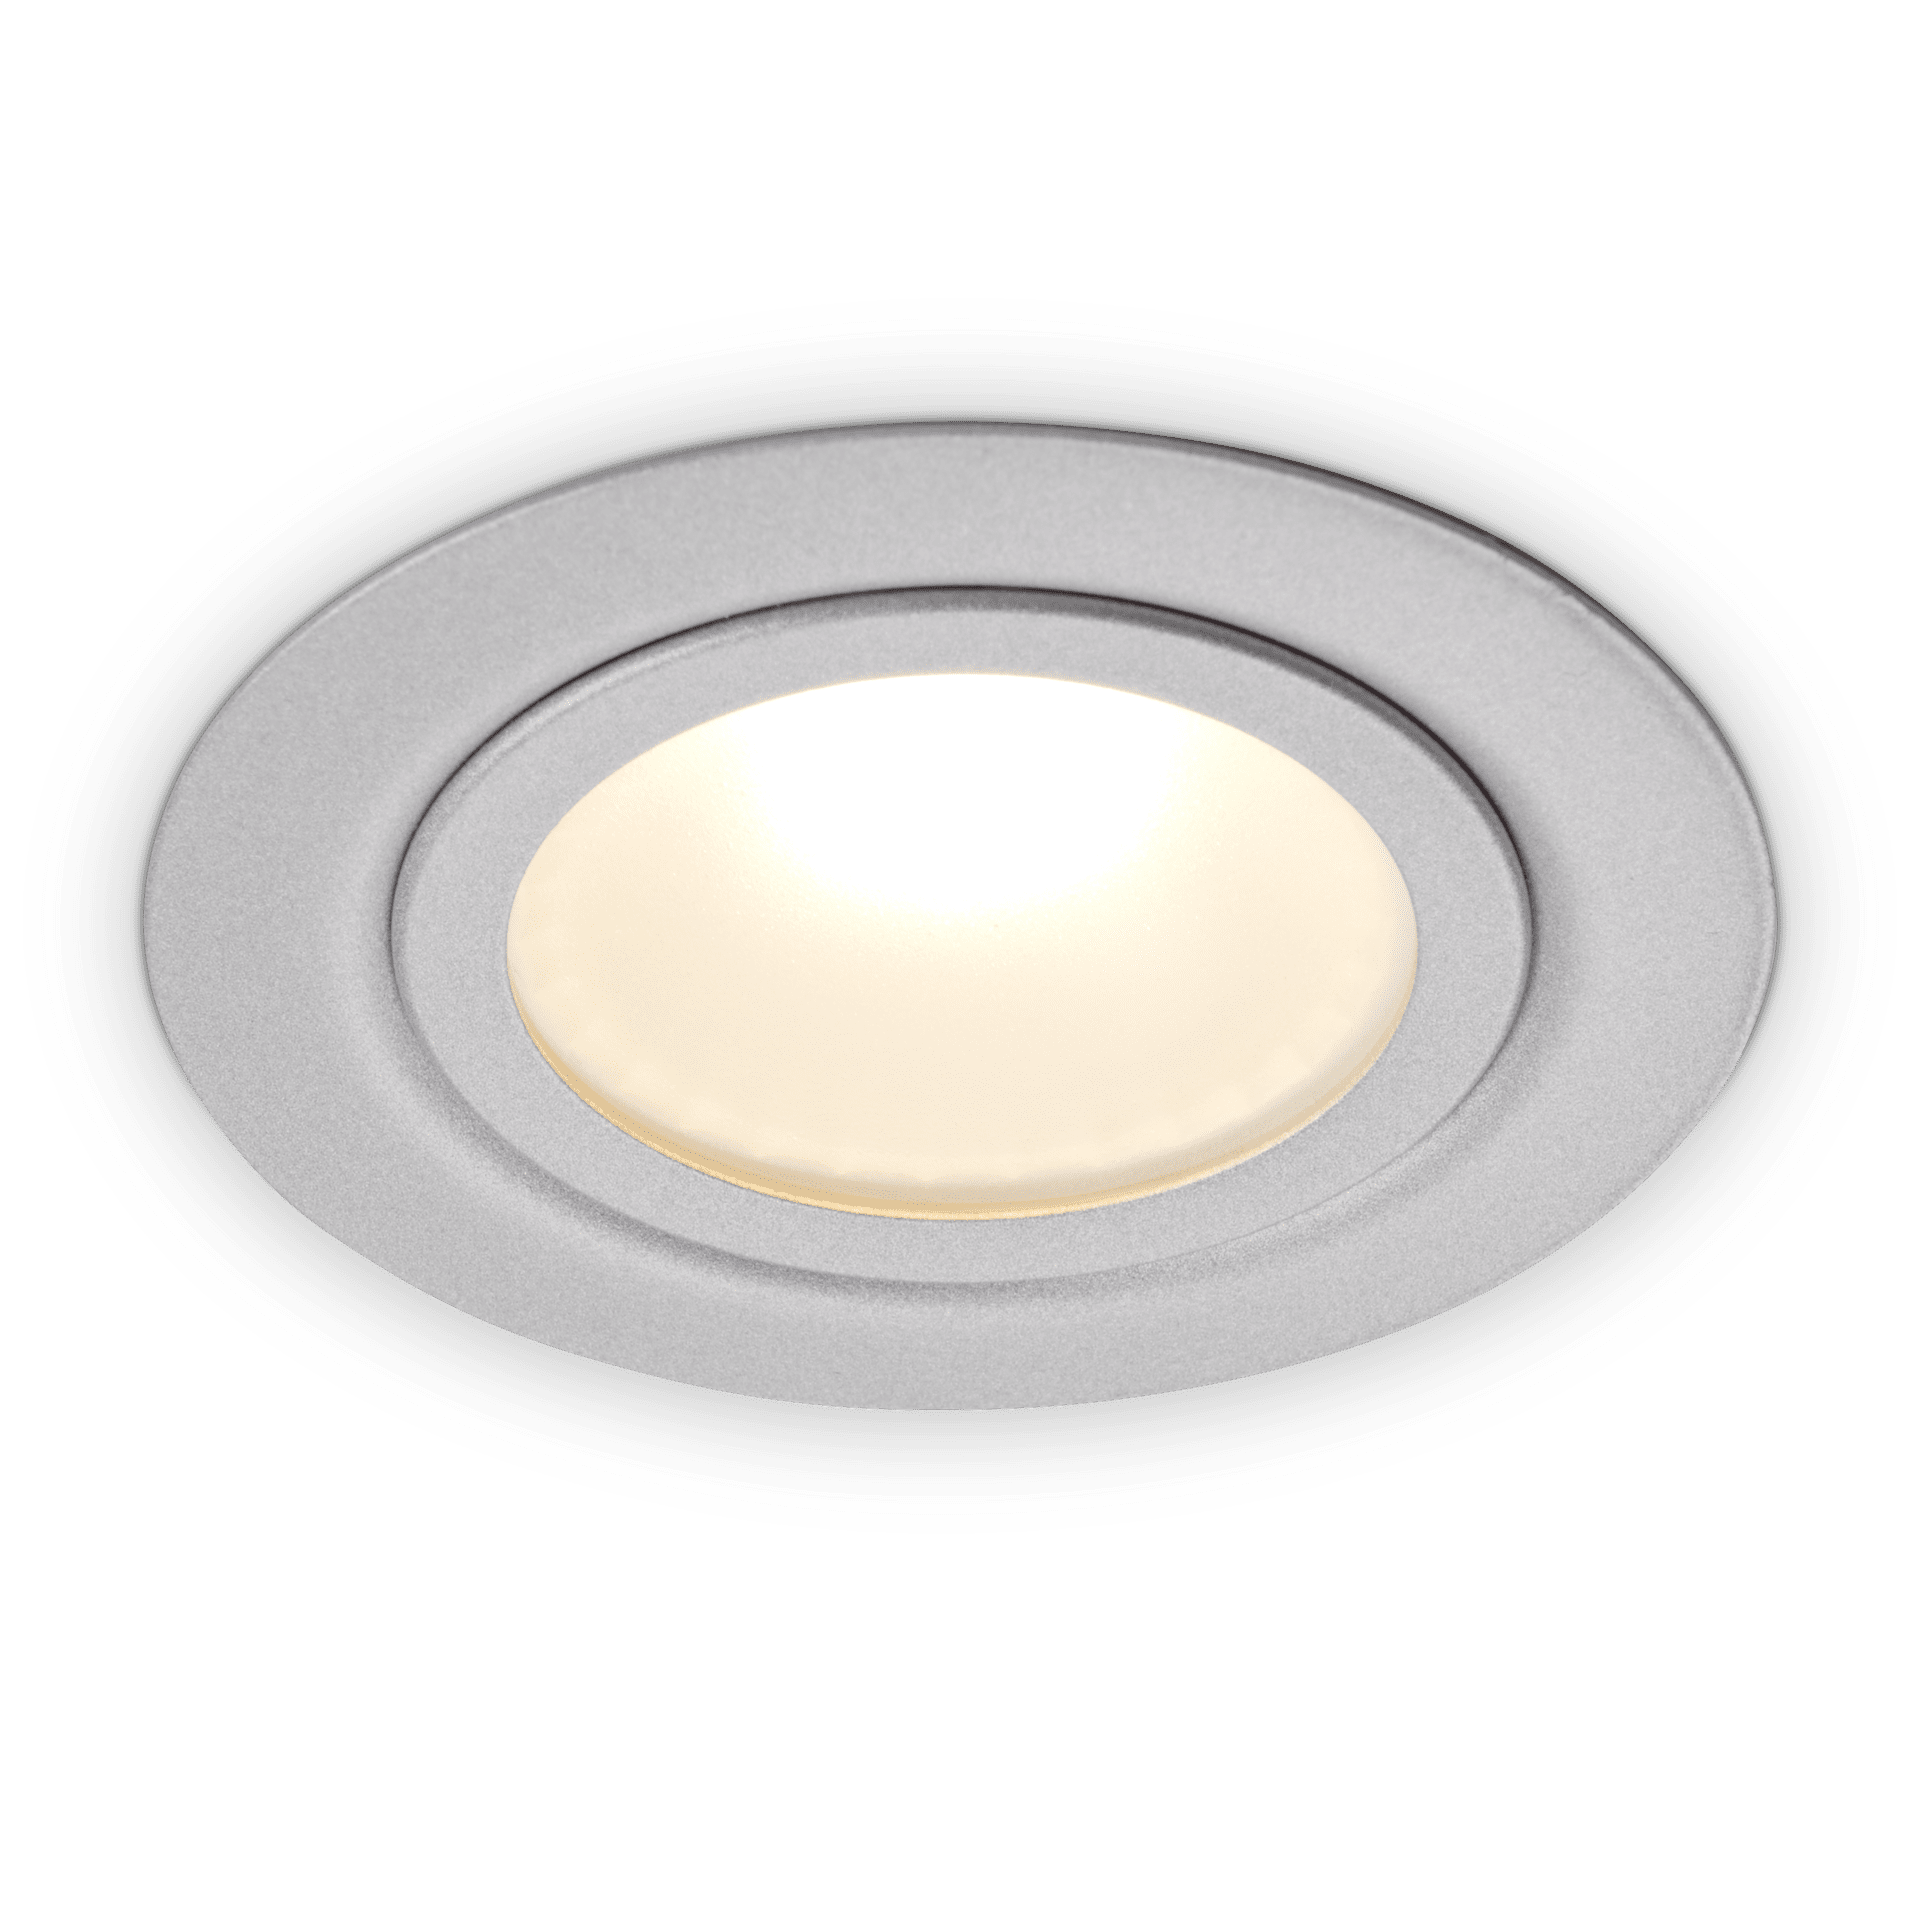 12V Dometic recessed light Cario2 LED 2W leaf spring chrome